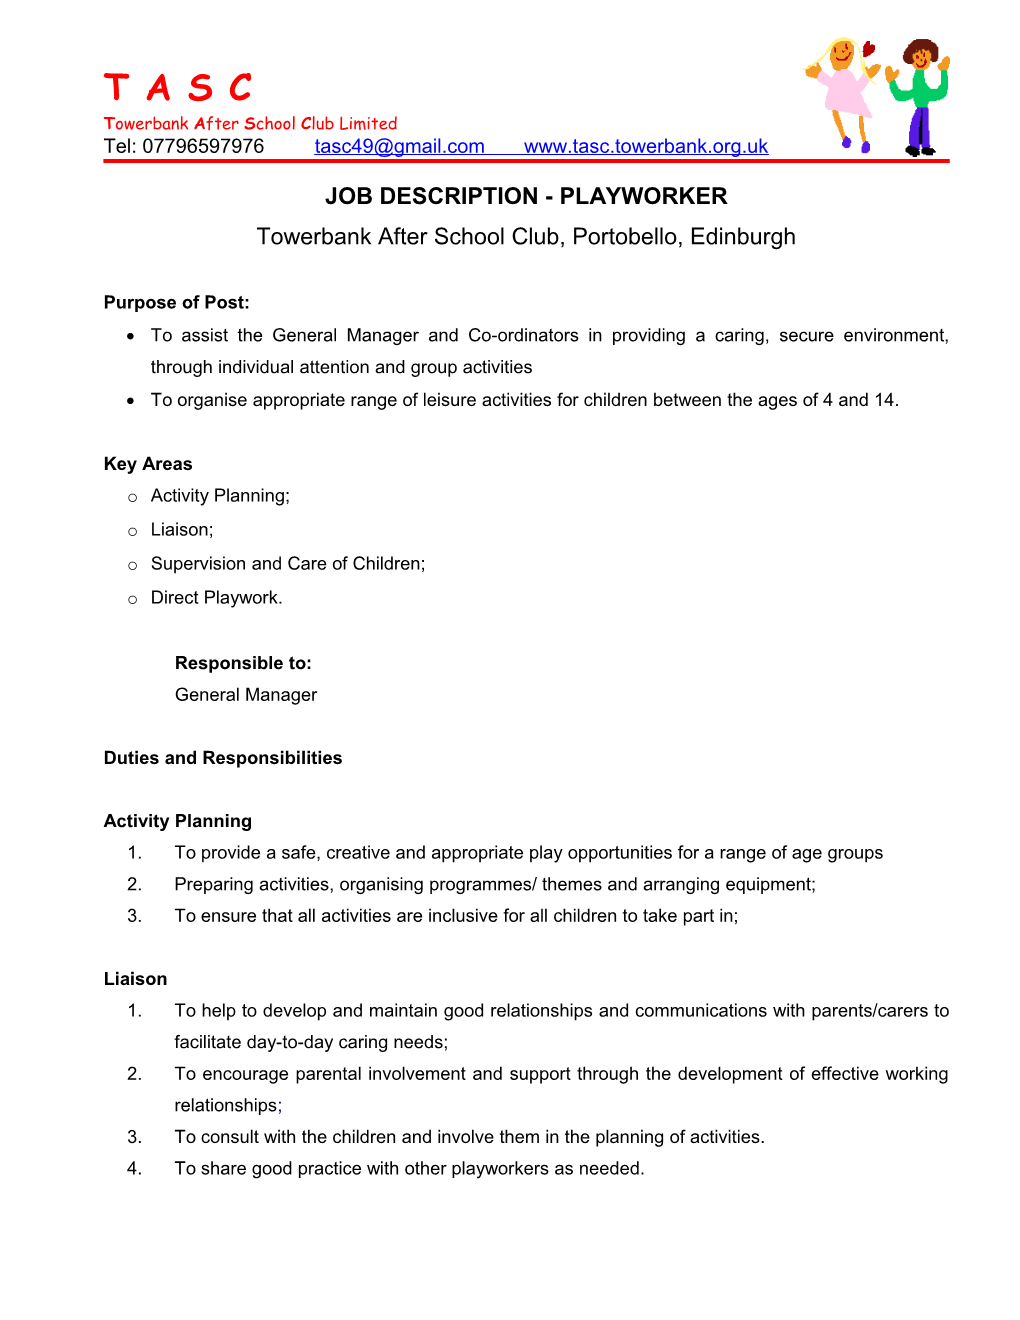 Sample Job Description - Playworker